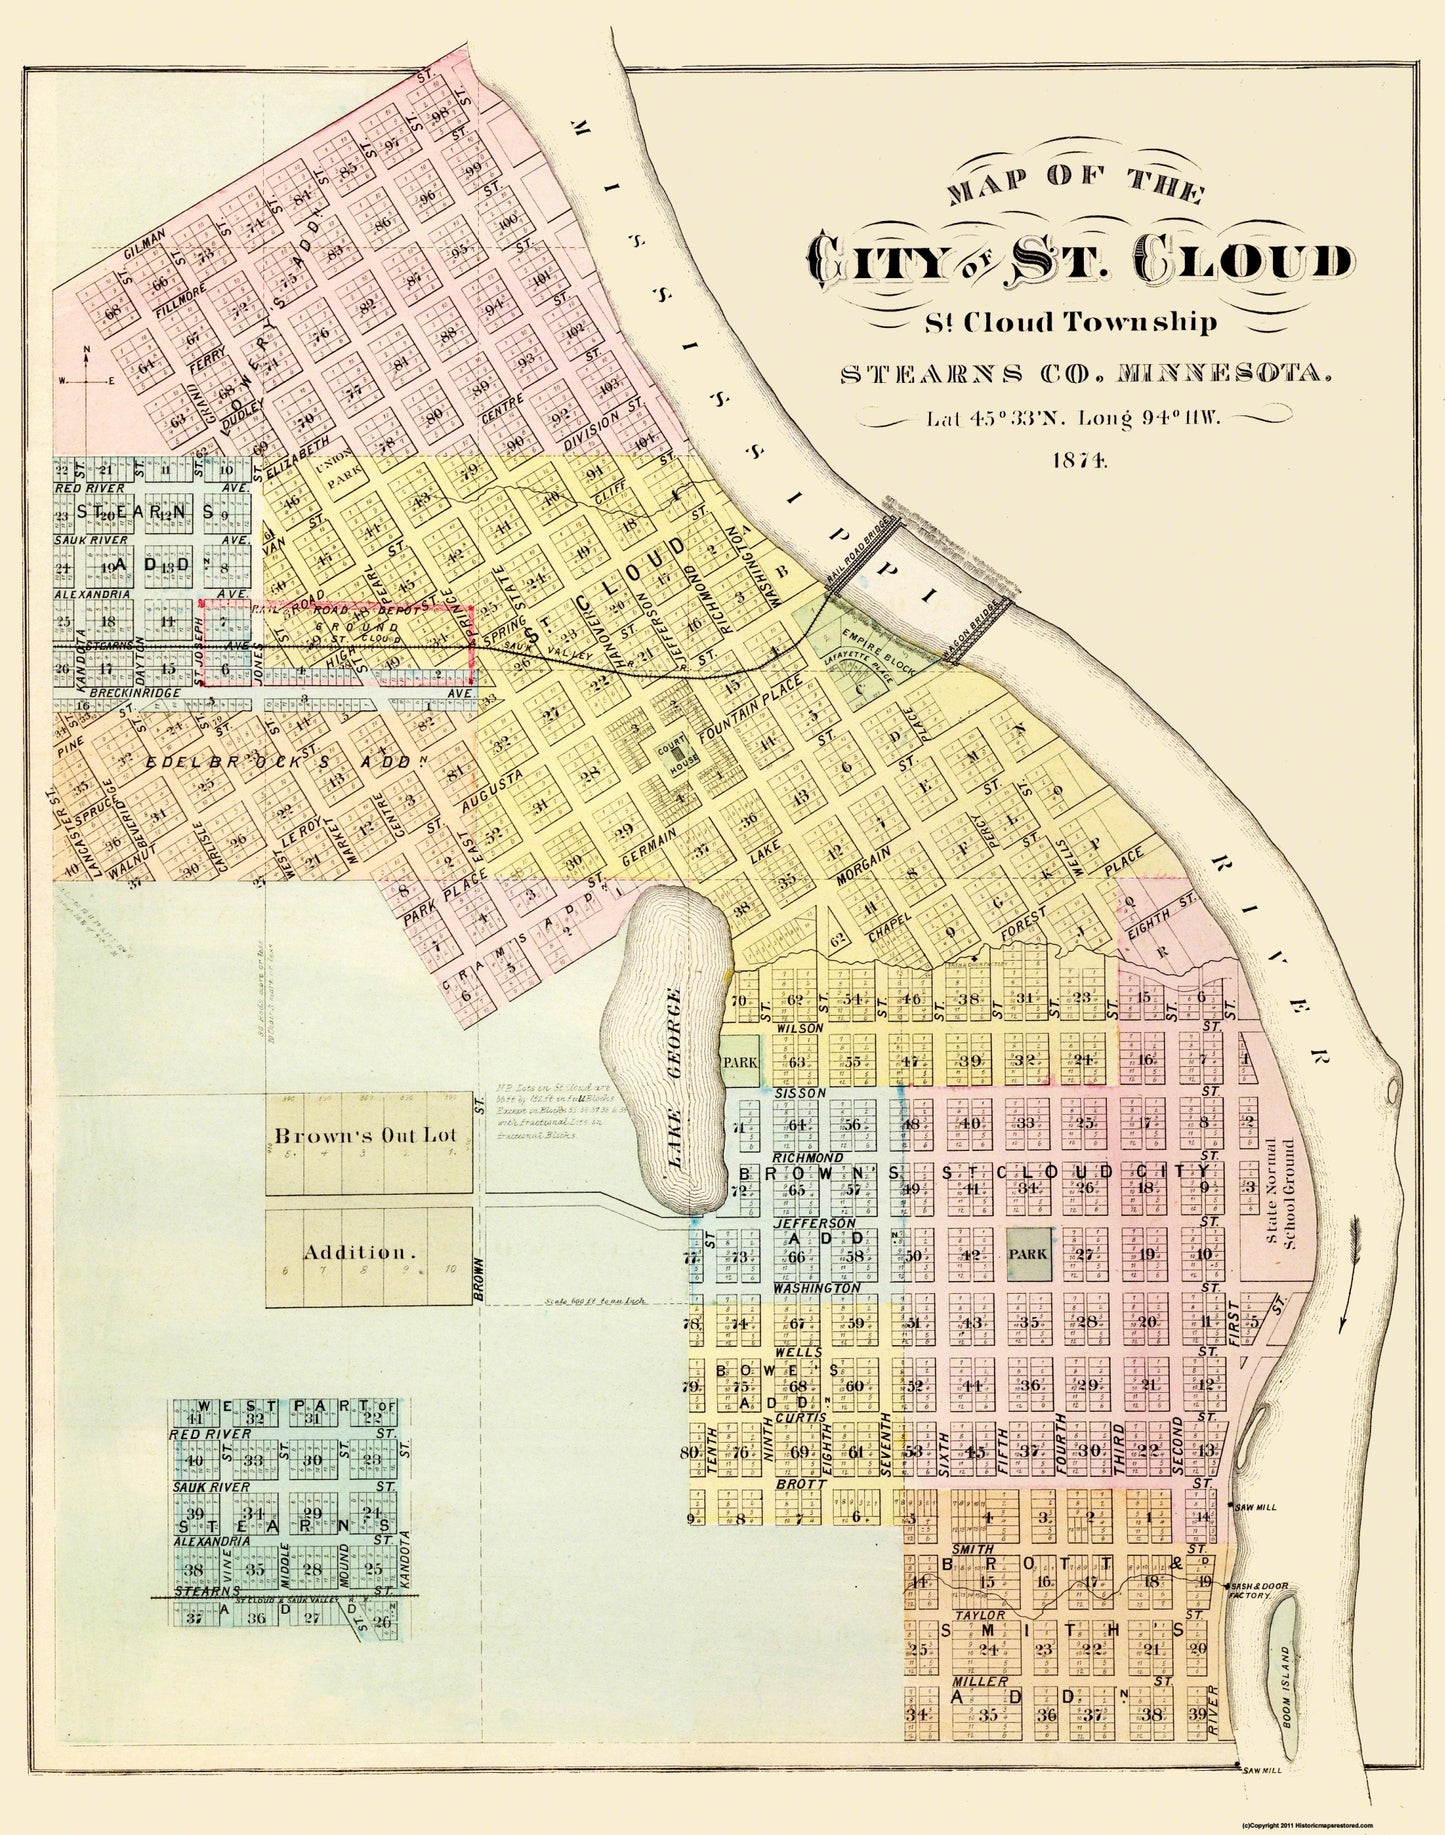 Historic City Map - Saint Cloud Minnesota - Andreas 1874 - 23 x 29.19 - Vintage Wall Art